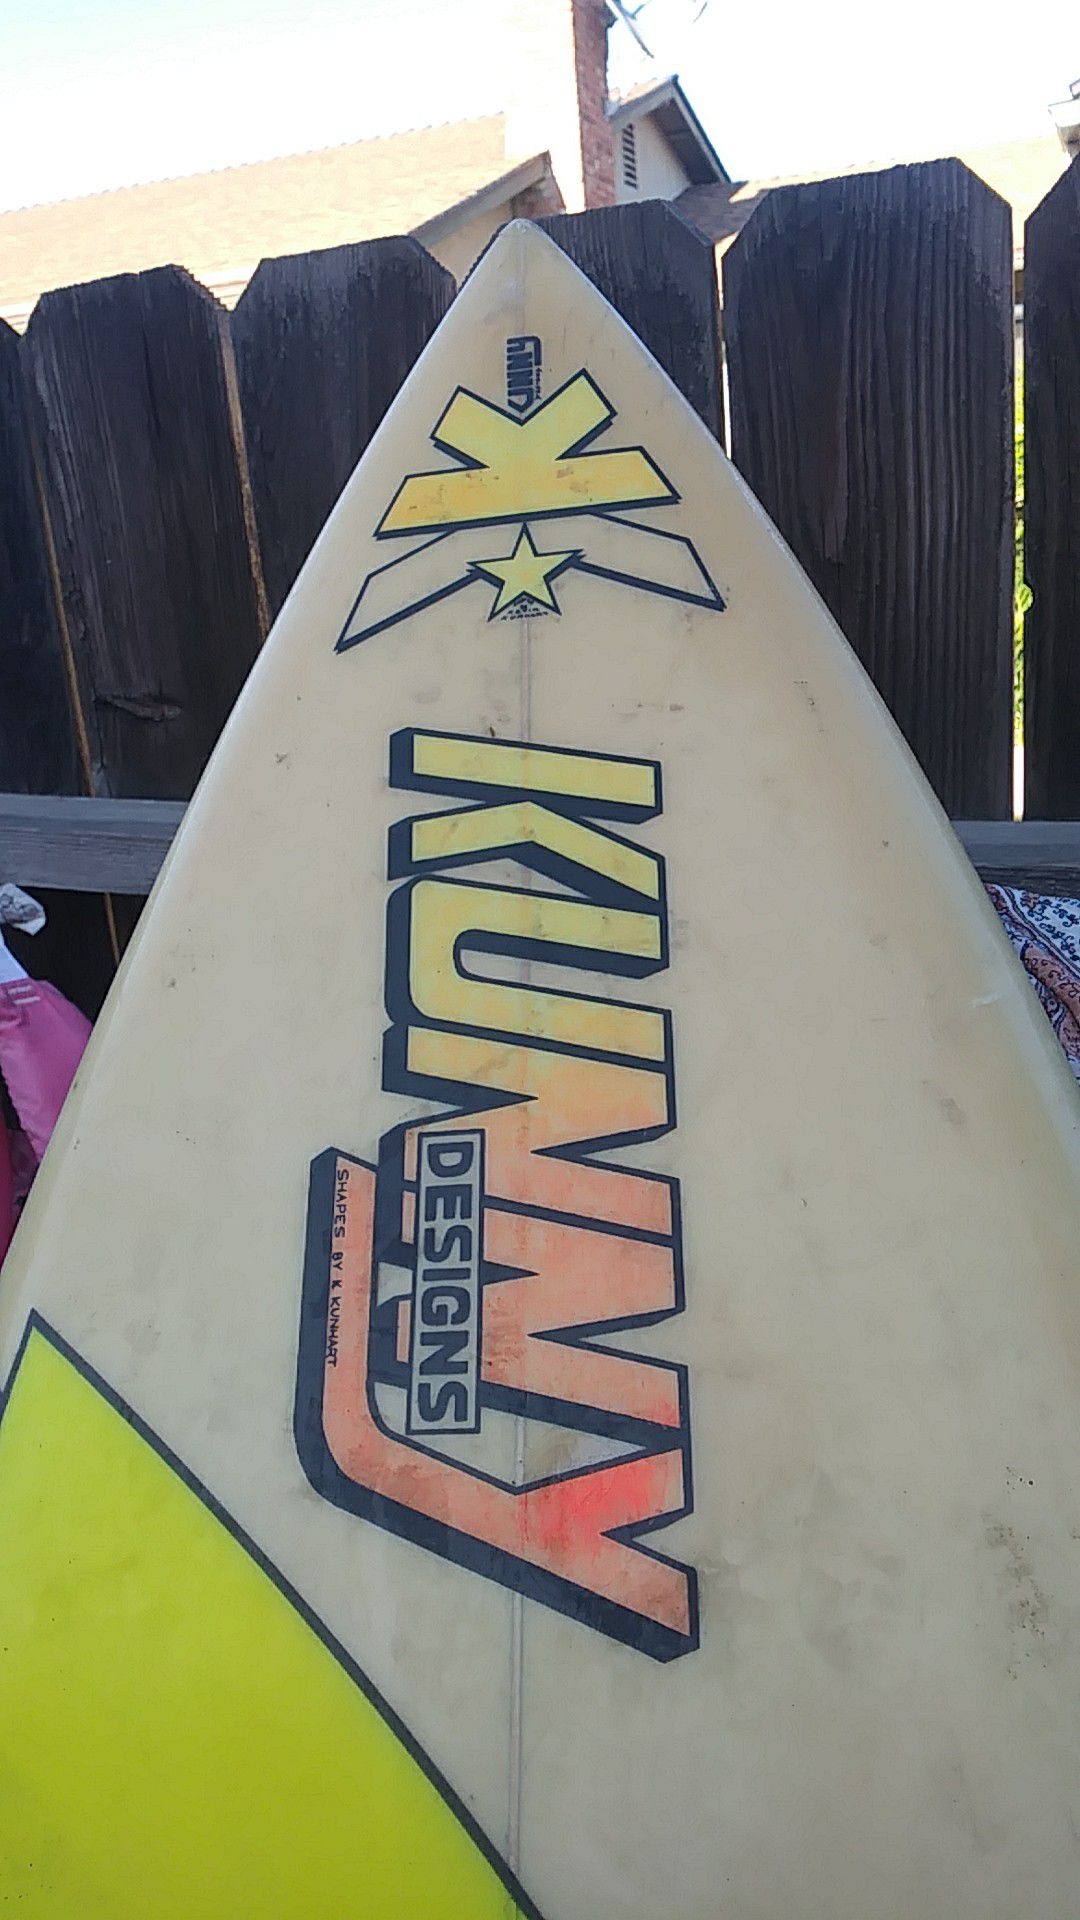 KUNNY SURF BOARD for Sale in Orange, CA - OfferUp